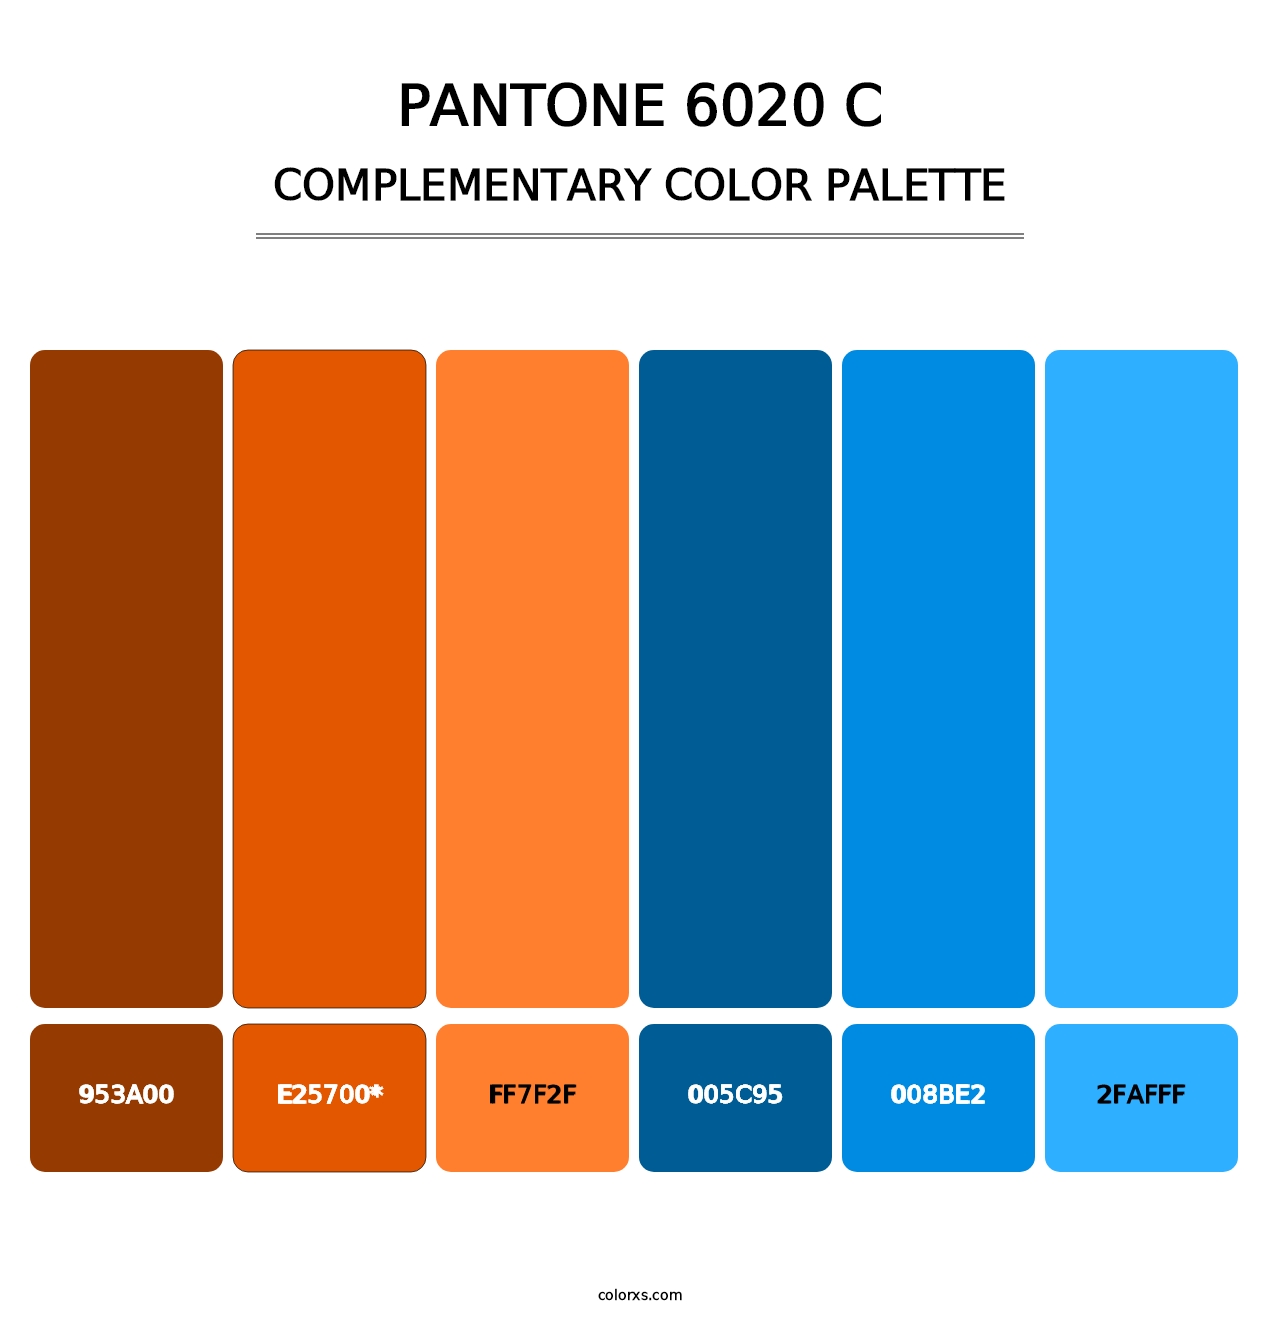 PANTONE 6020 C - Complementary Color Palette